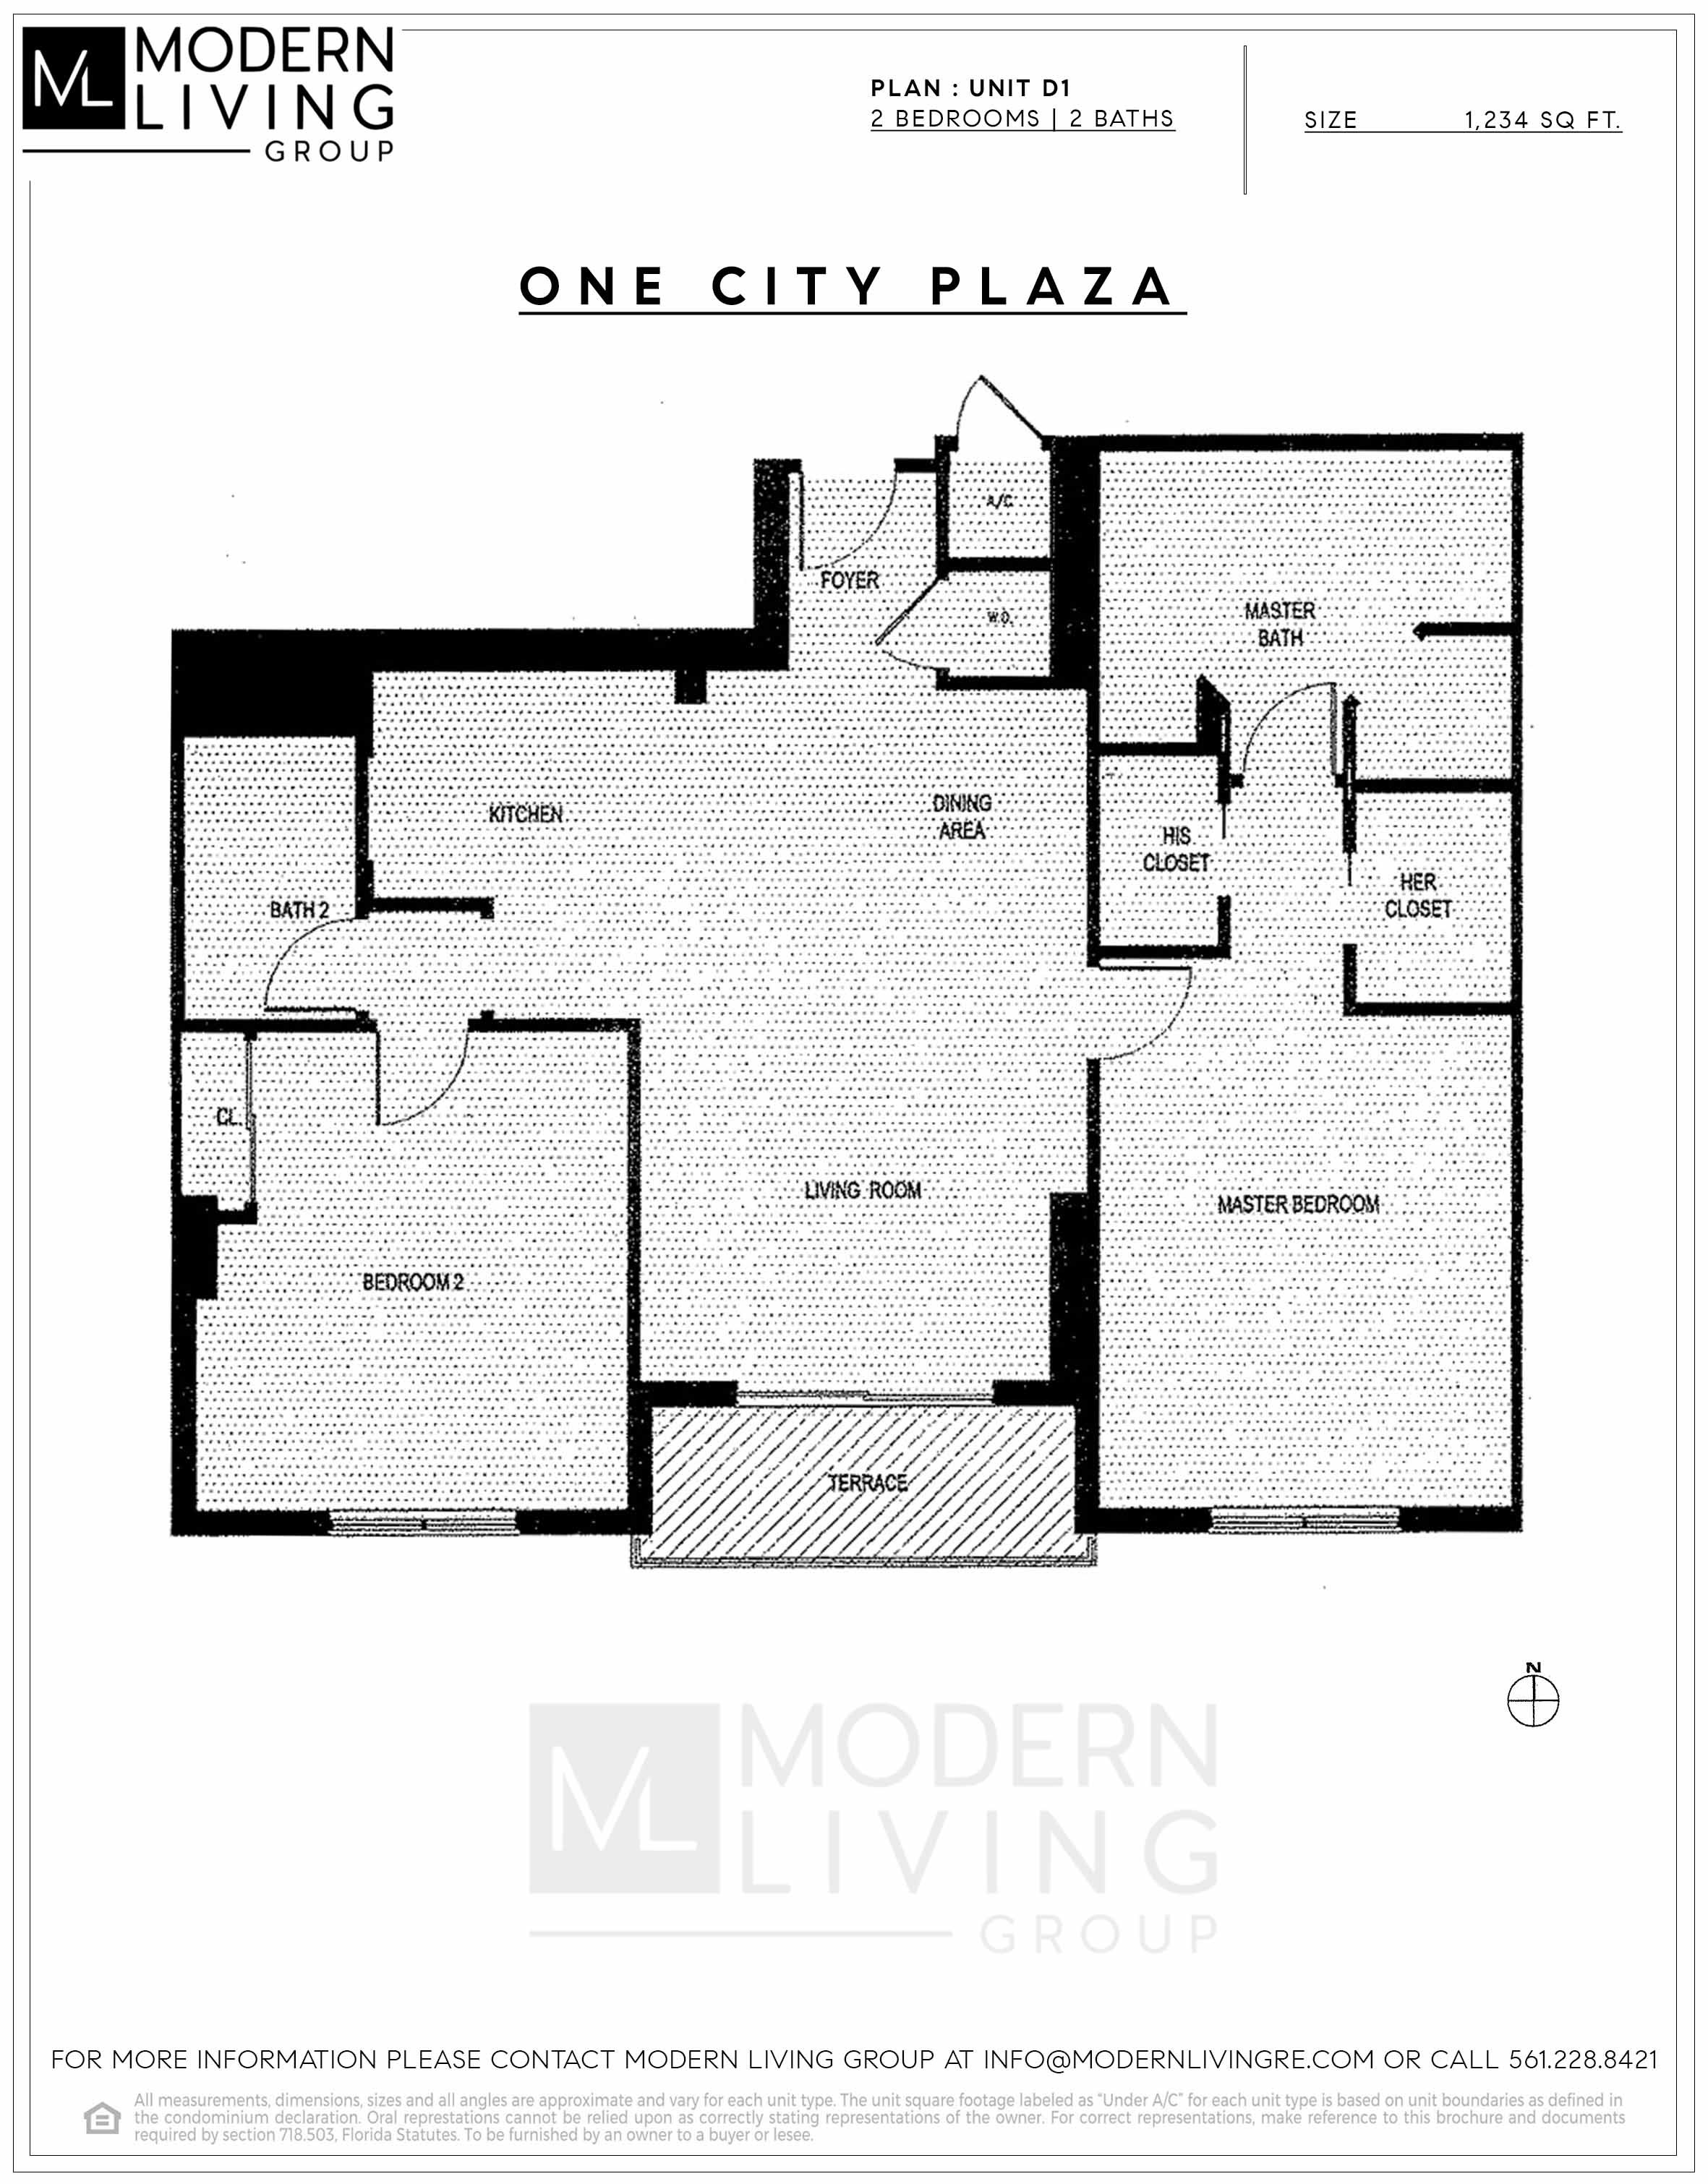 Floor Plan for One City Plaza Floorplans, Unit D1